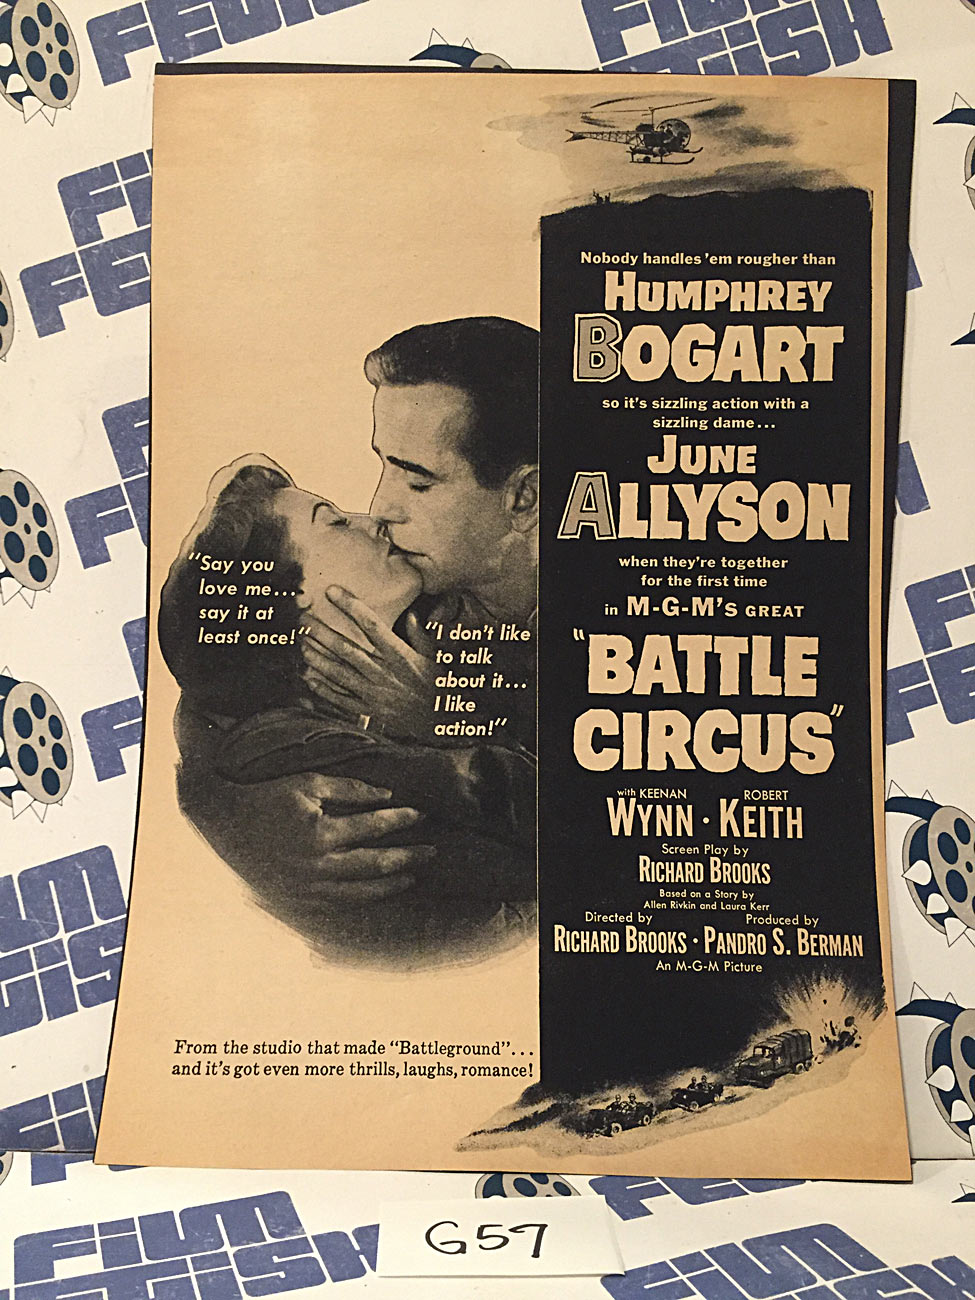 Battle Circus (1953) Movie Original Full-Page Magazine Advertisement, Humphrey Bogart, June Allyson [G57]